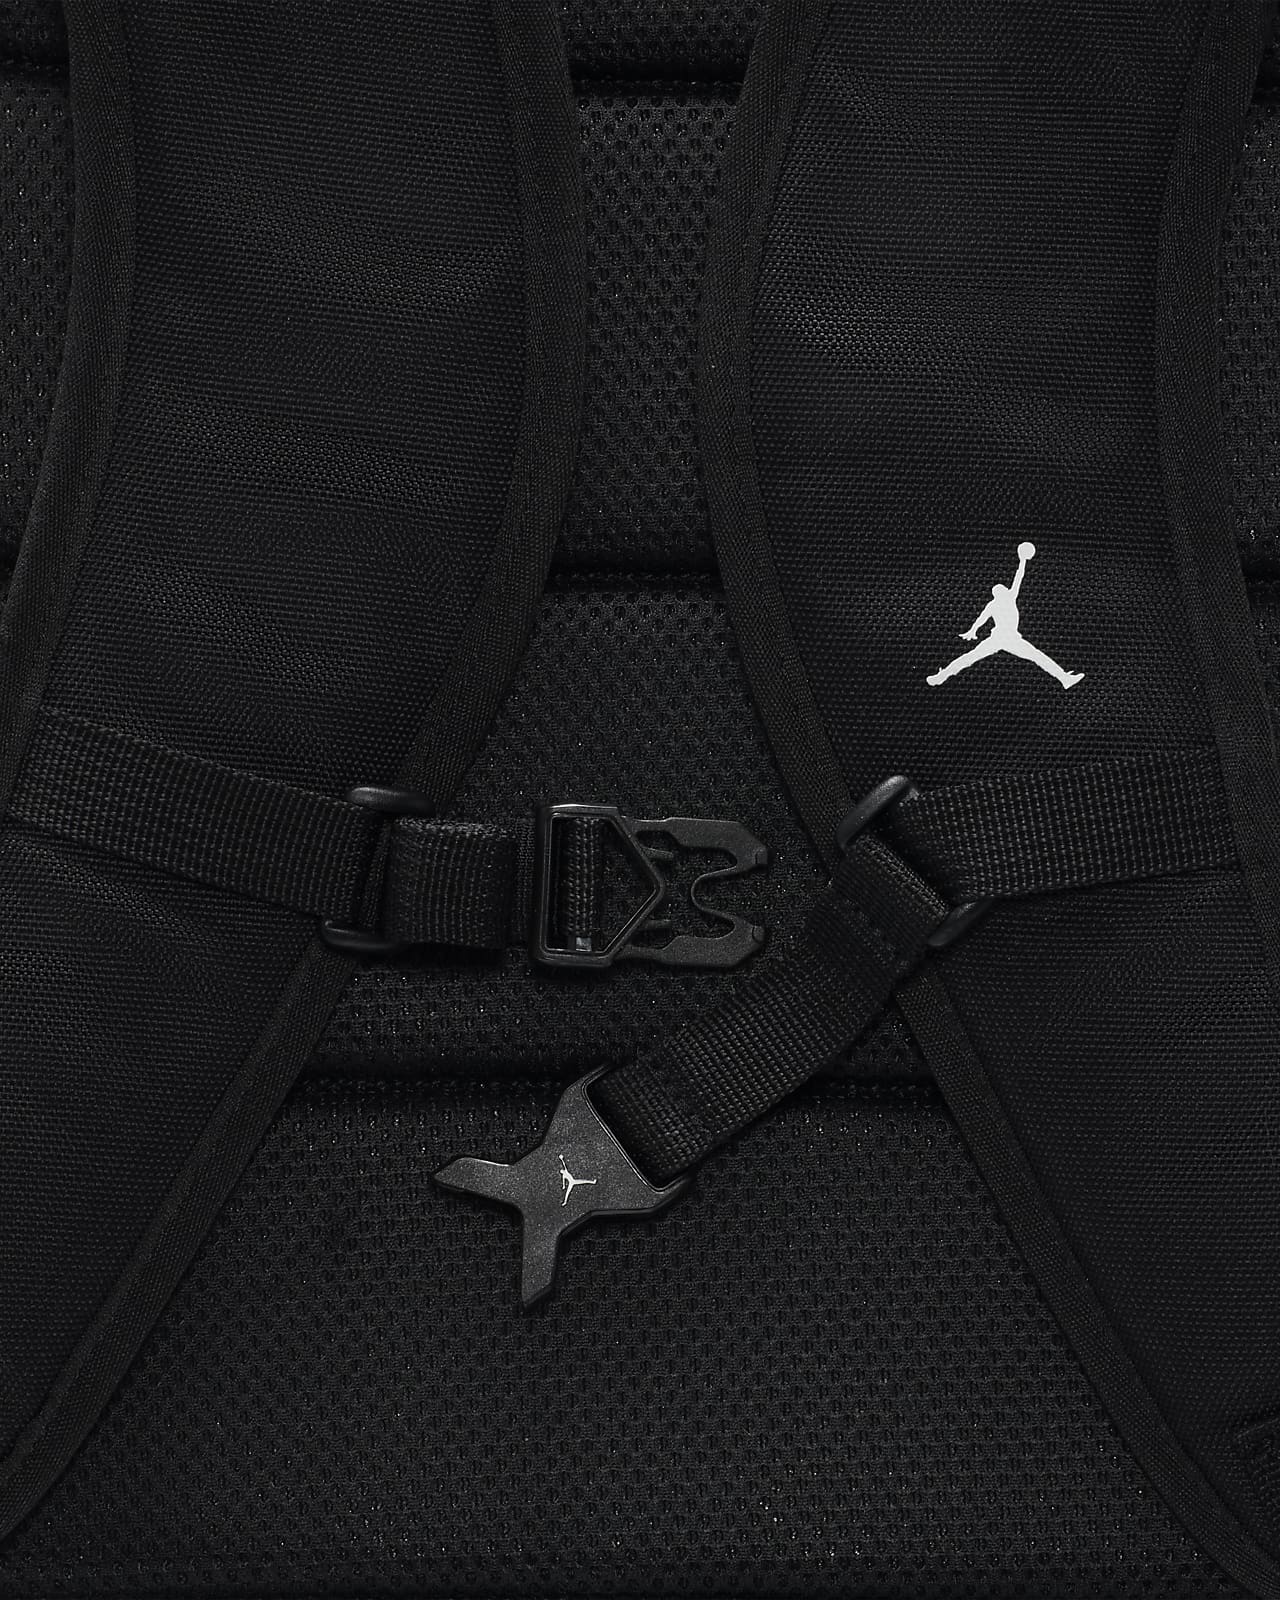 Jordan Sport Backpack Backpack (35L). Nike UK